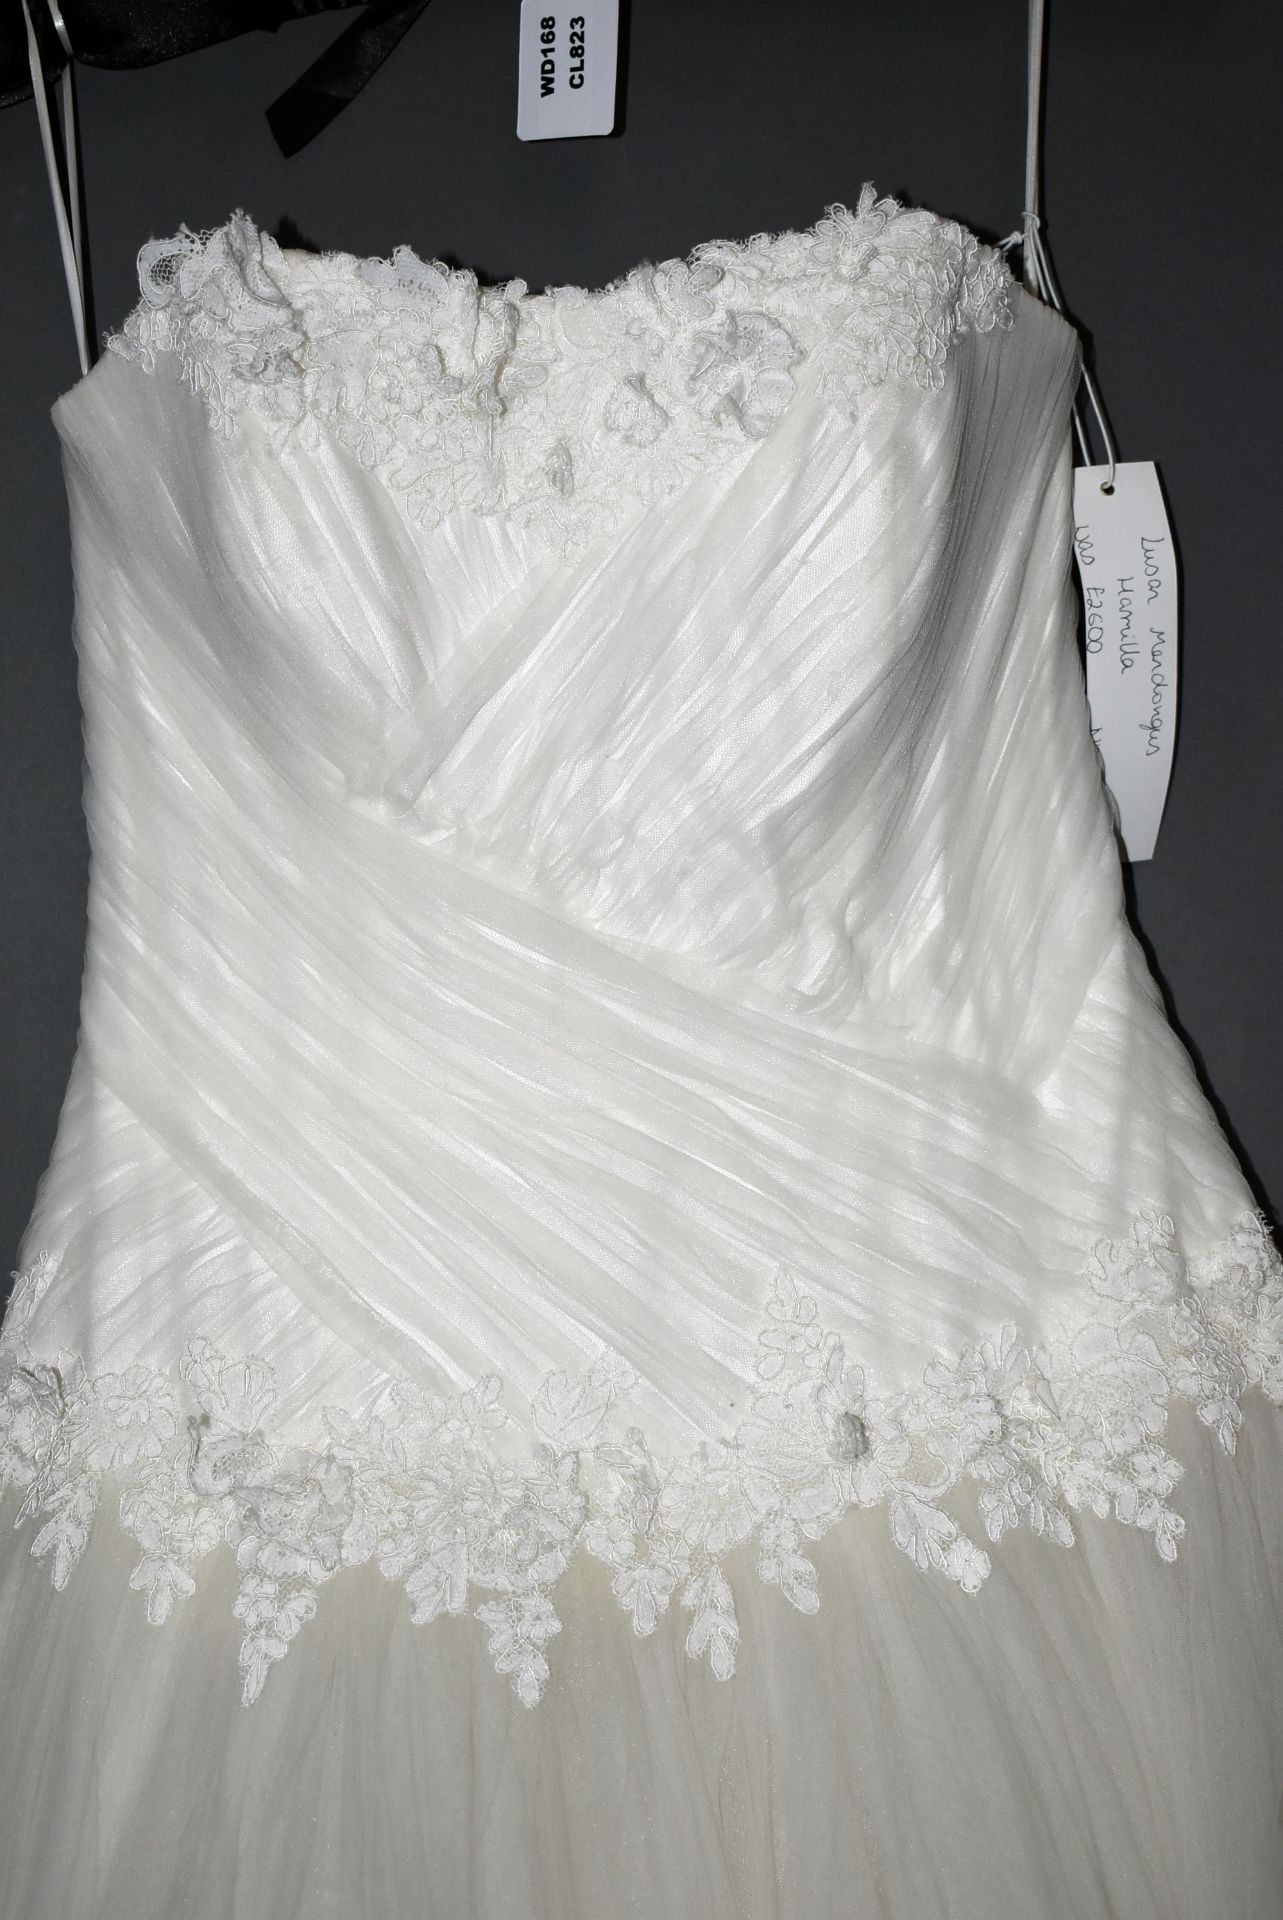 1 x LUSAN MANDONGUS Strapless Chiffon And Lace Designer Wedding Dress Bridal Gown RRP £2,600 UK 12 - Image 2 of 6